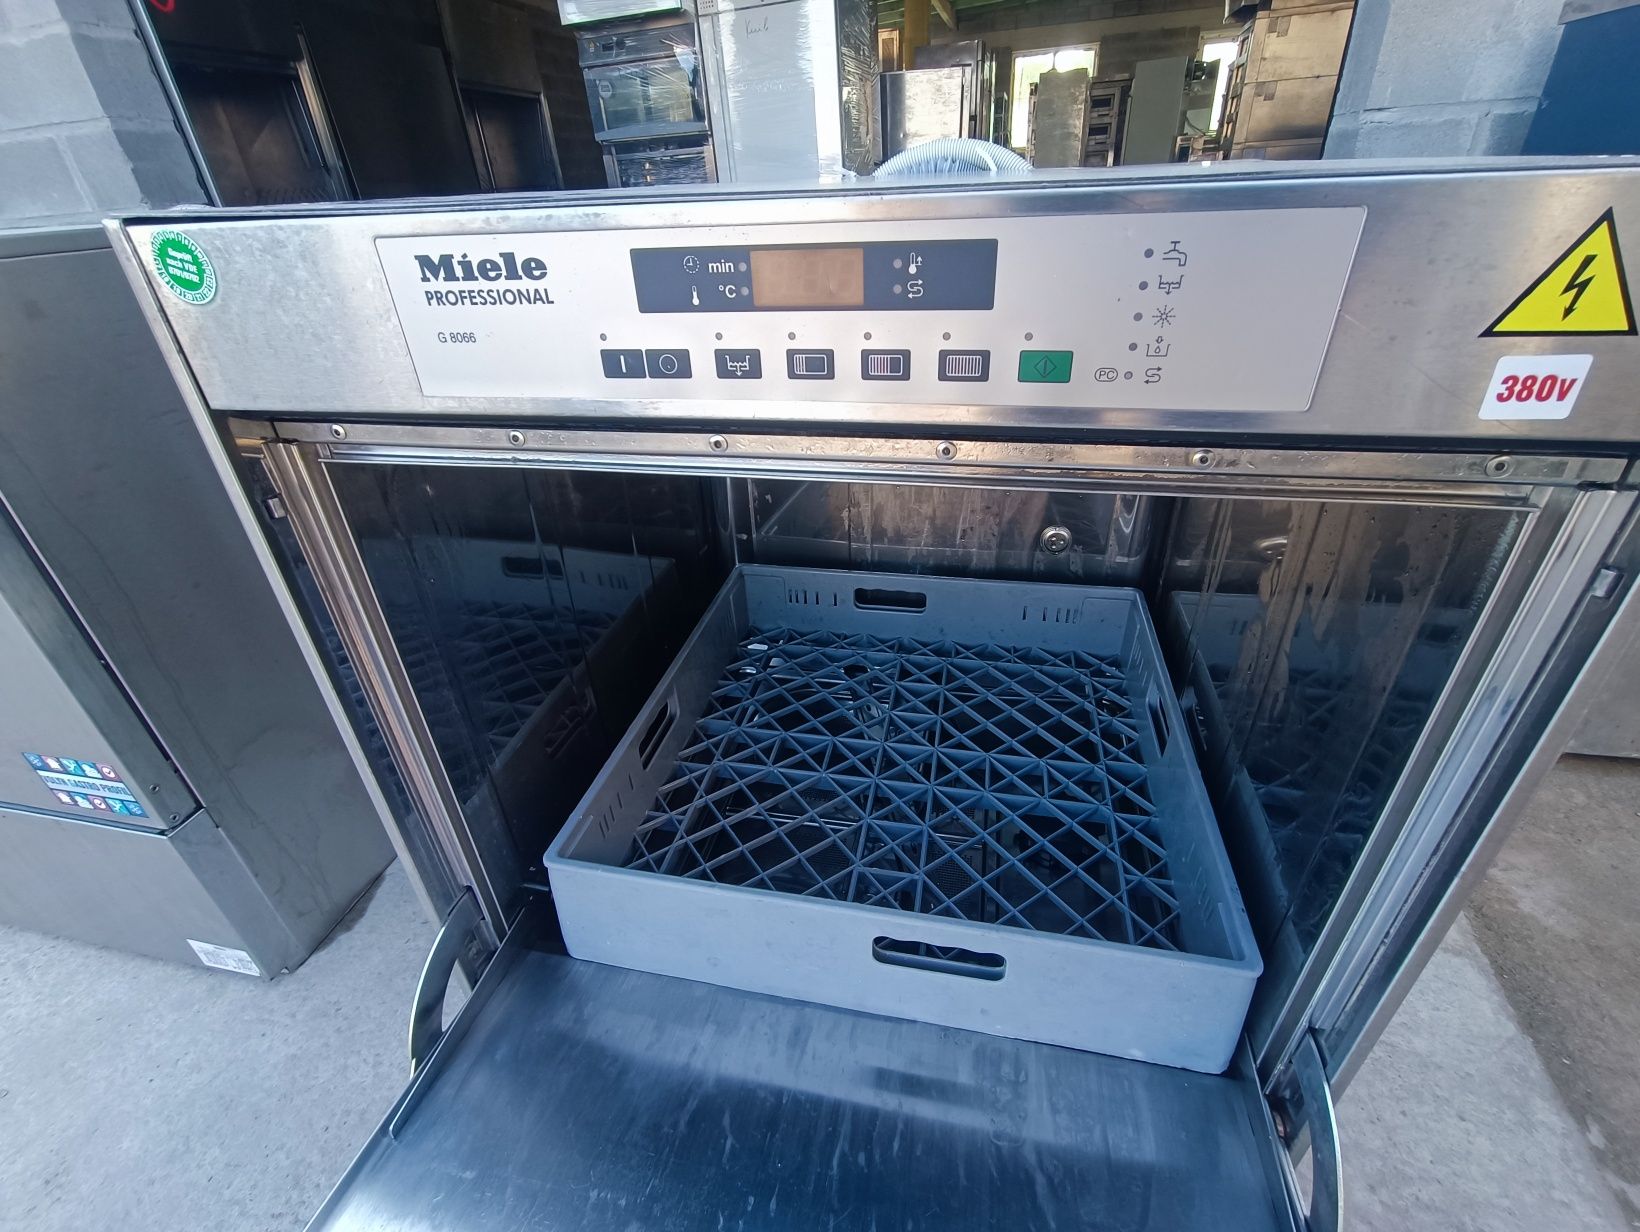 Професійна посудомийна машина Miele G8066